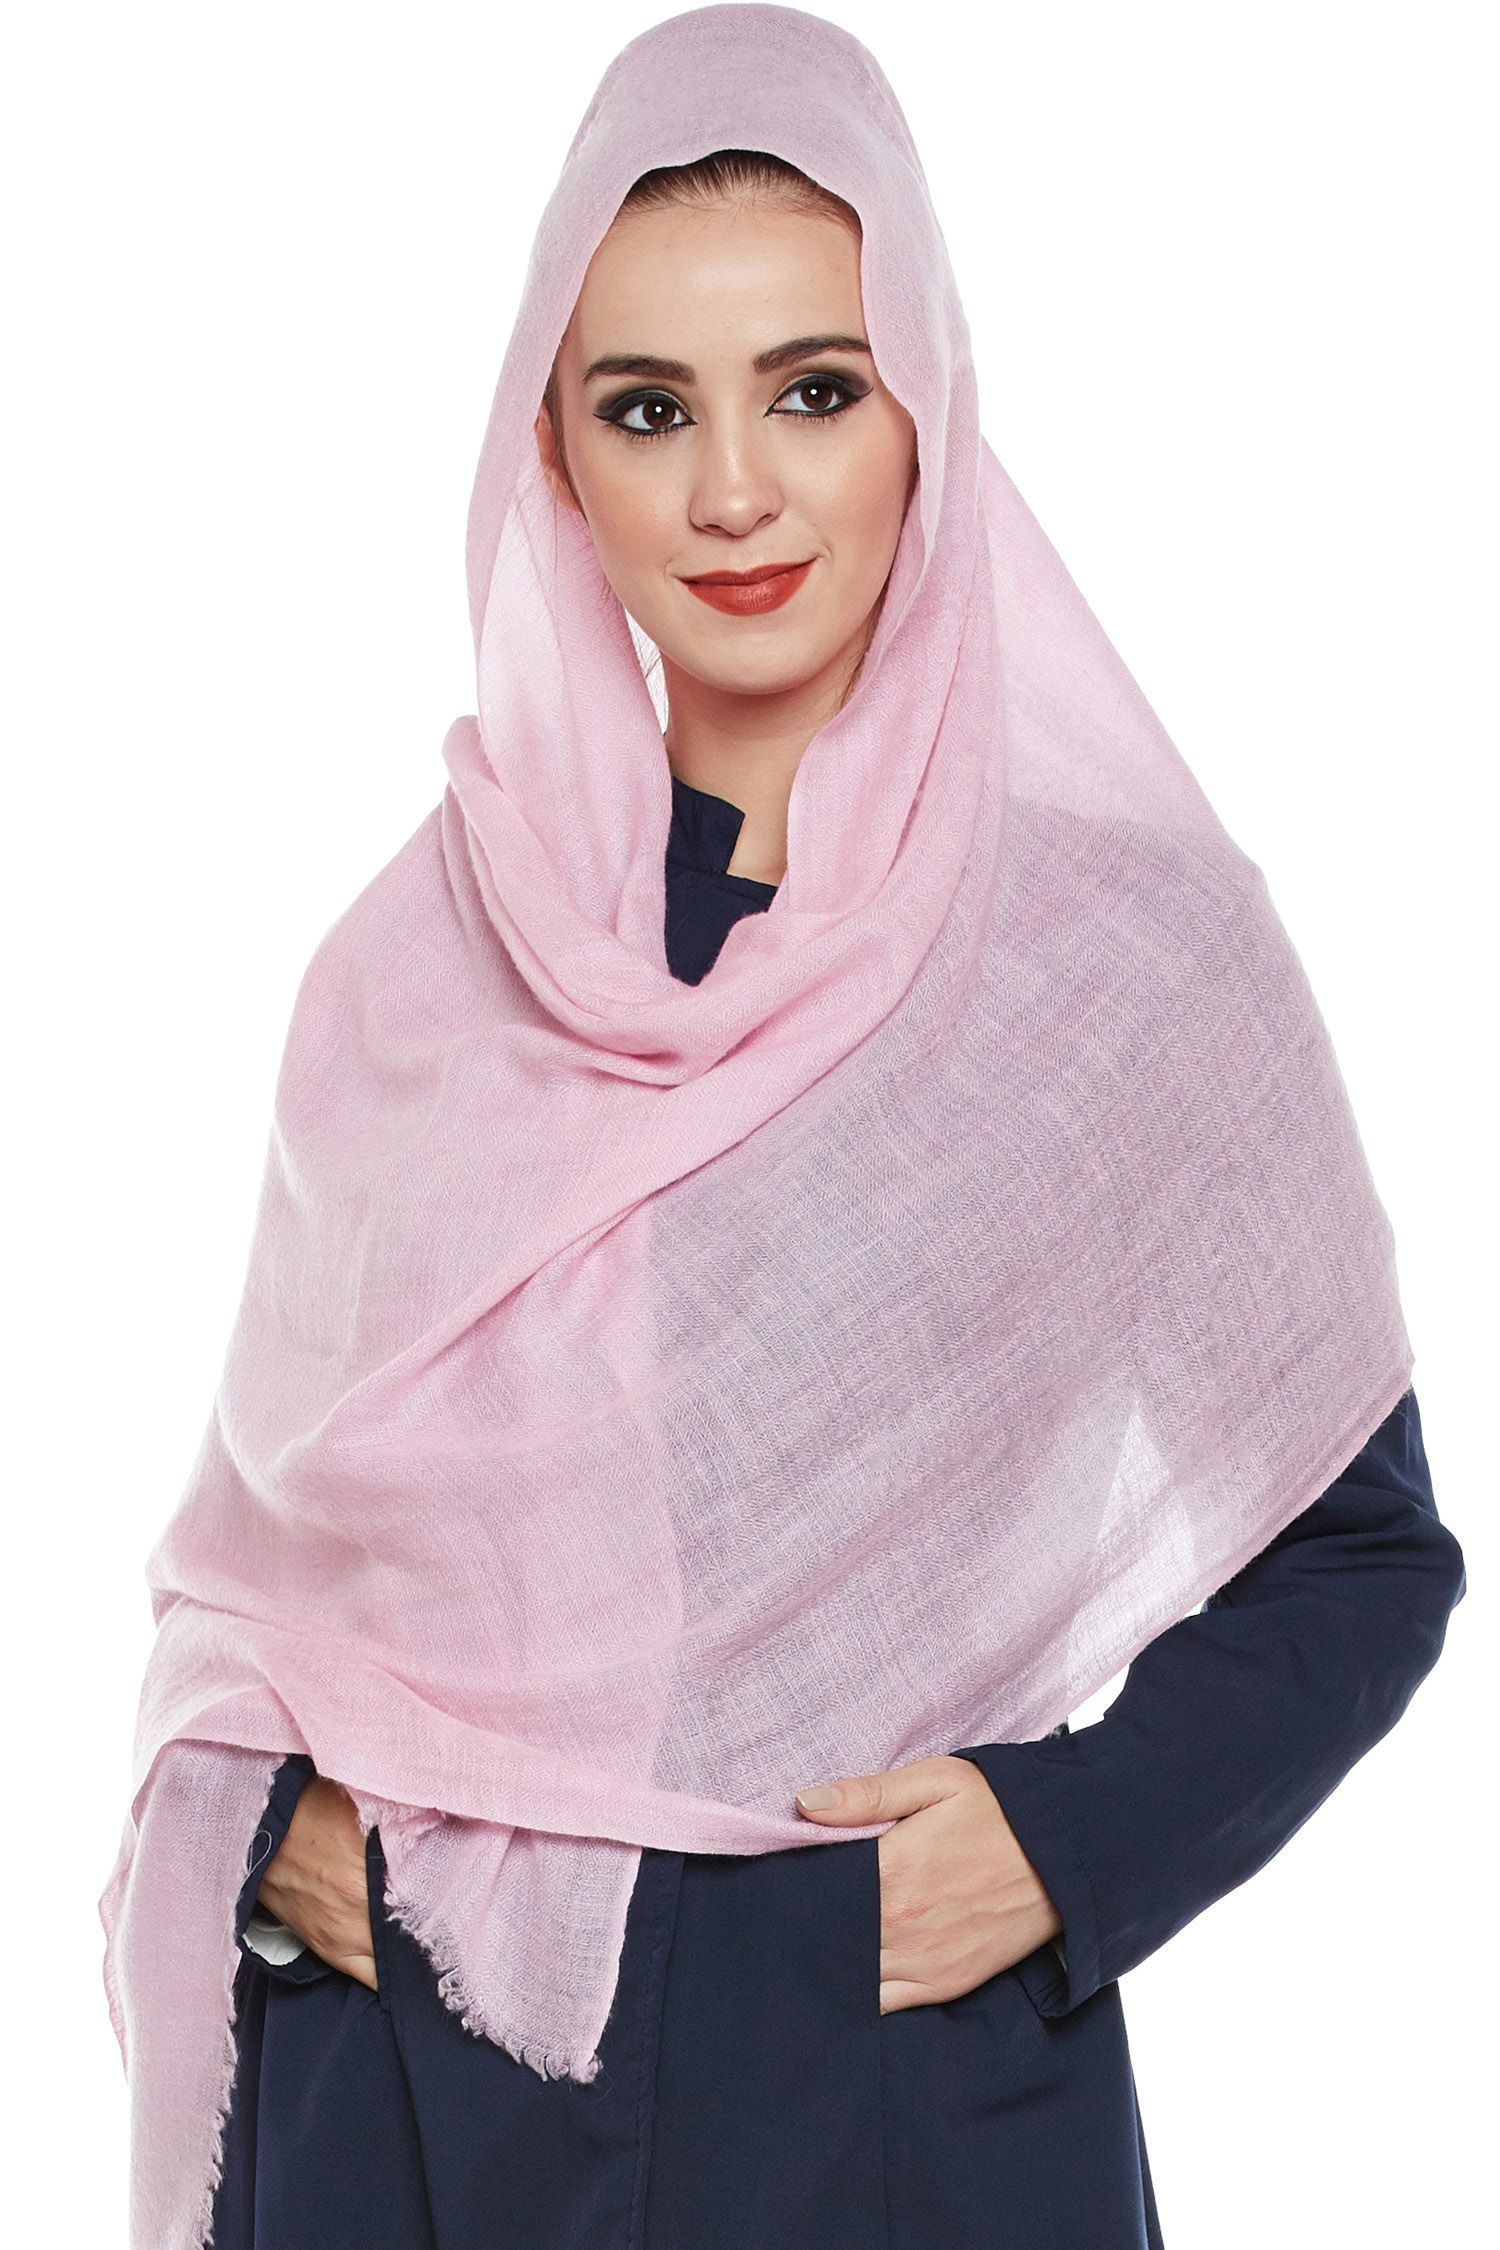 Baby Pink Pashmina Hijab | Handmade Cashmere Head Scarf